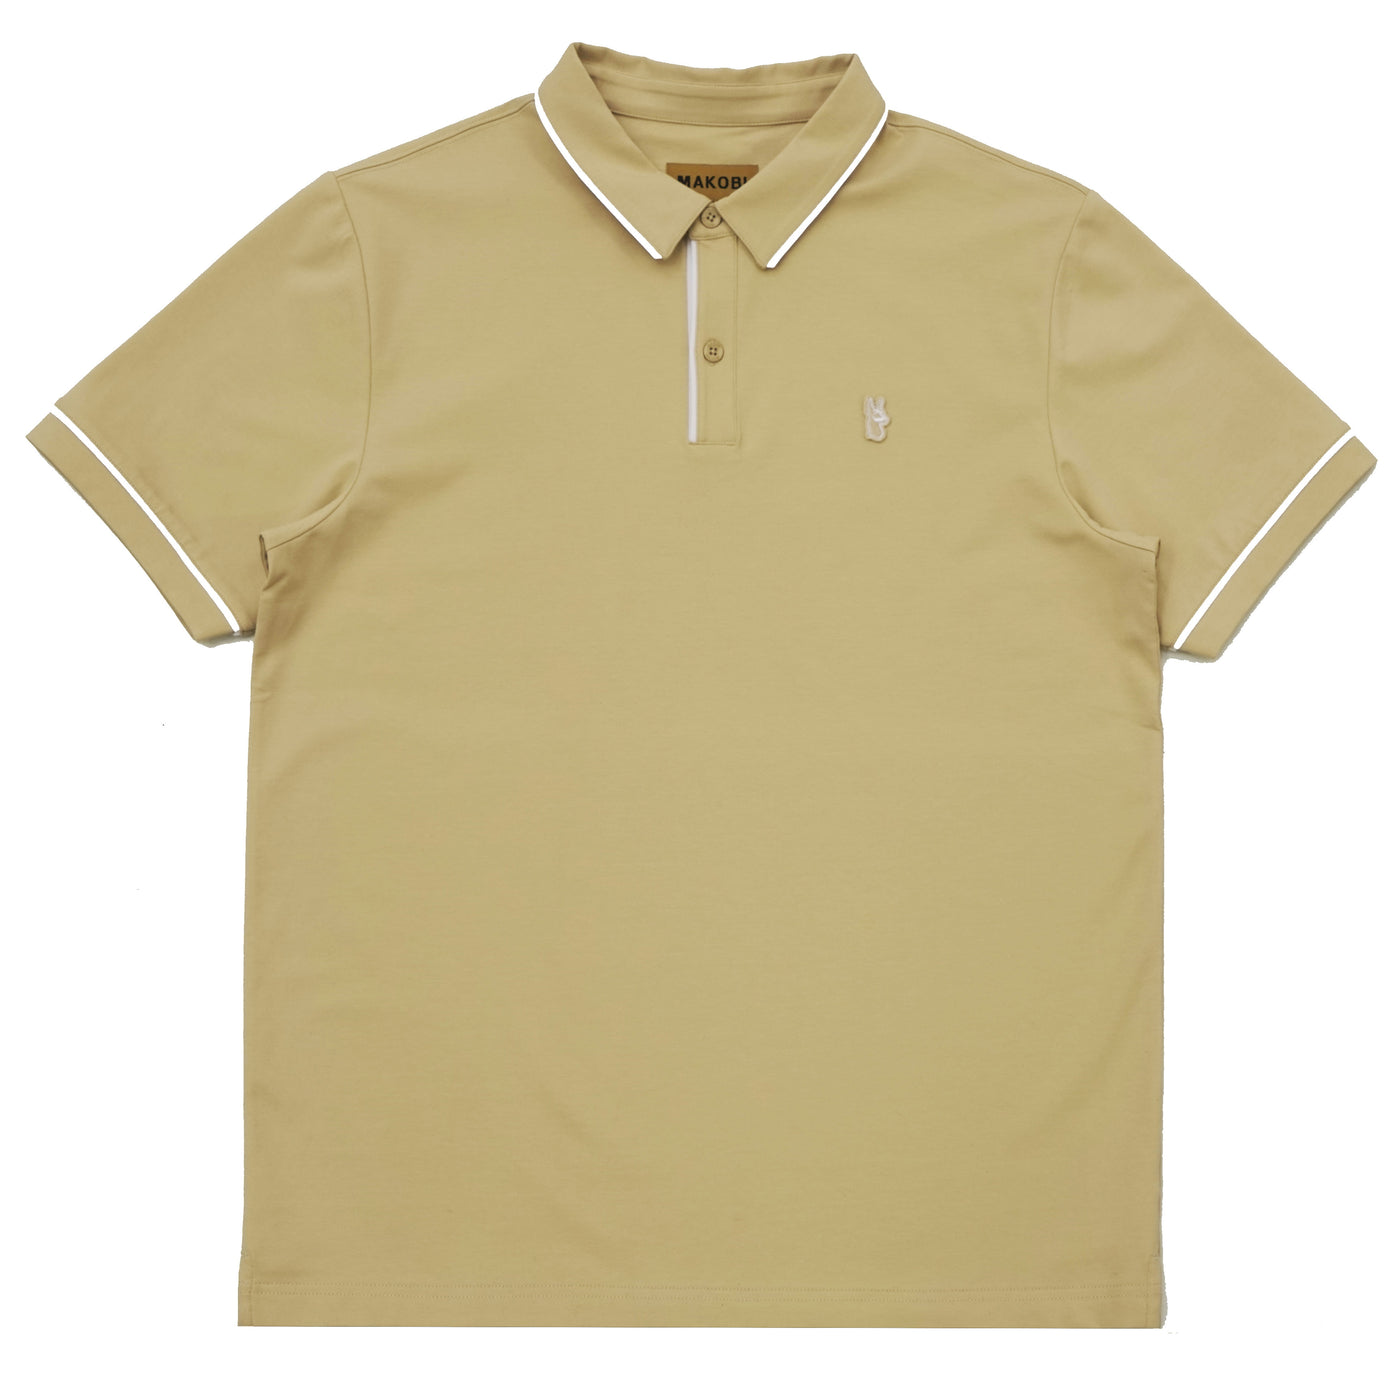 M383 Makobi Luciano Polo Shirt - Khaki